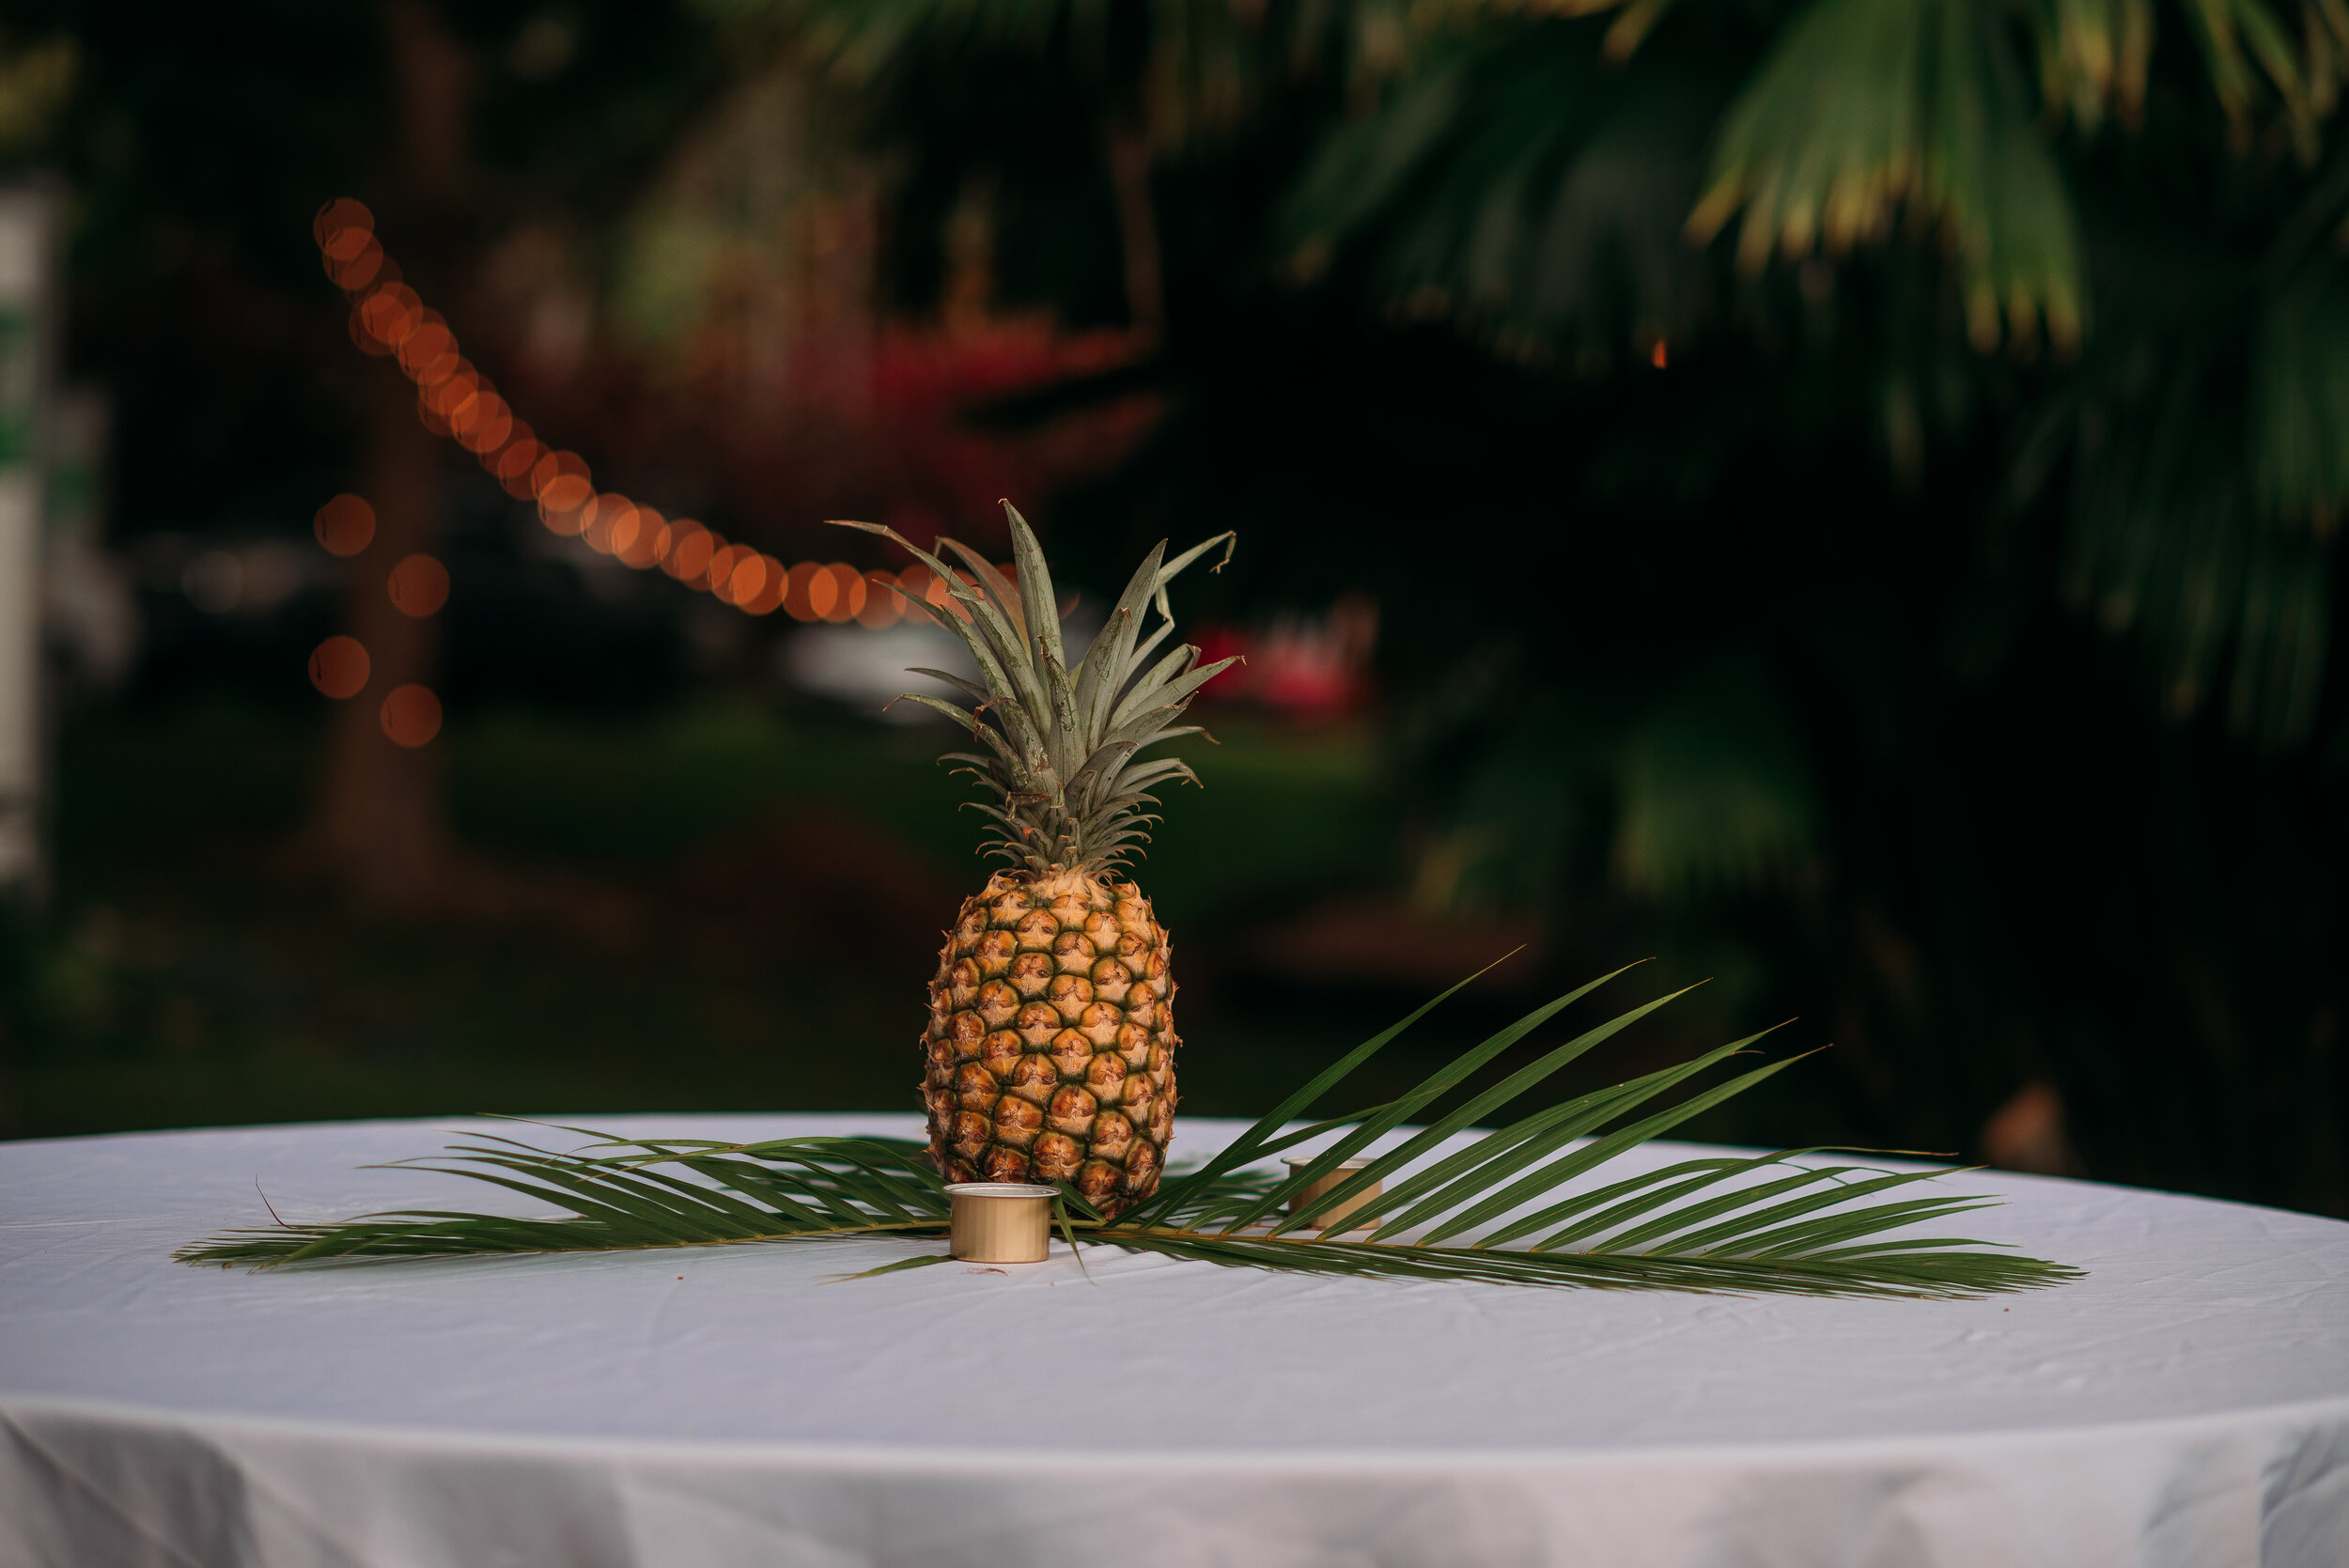 hawaii pineapple